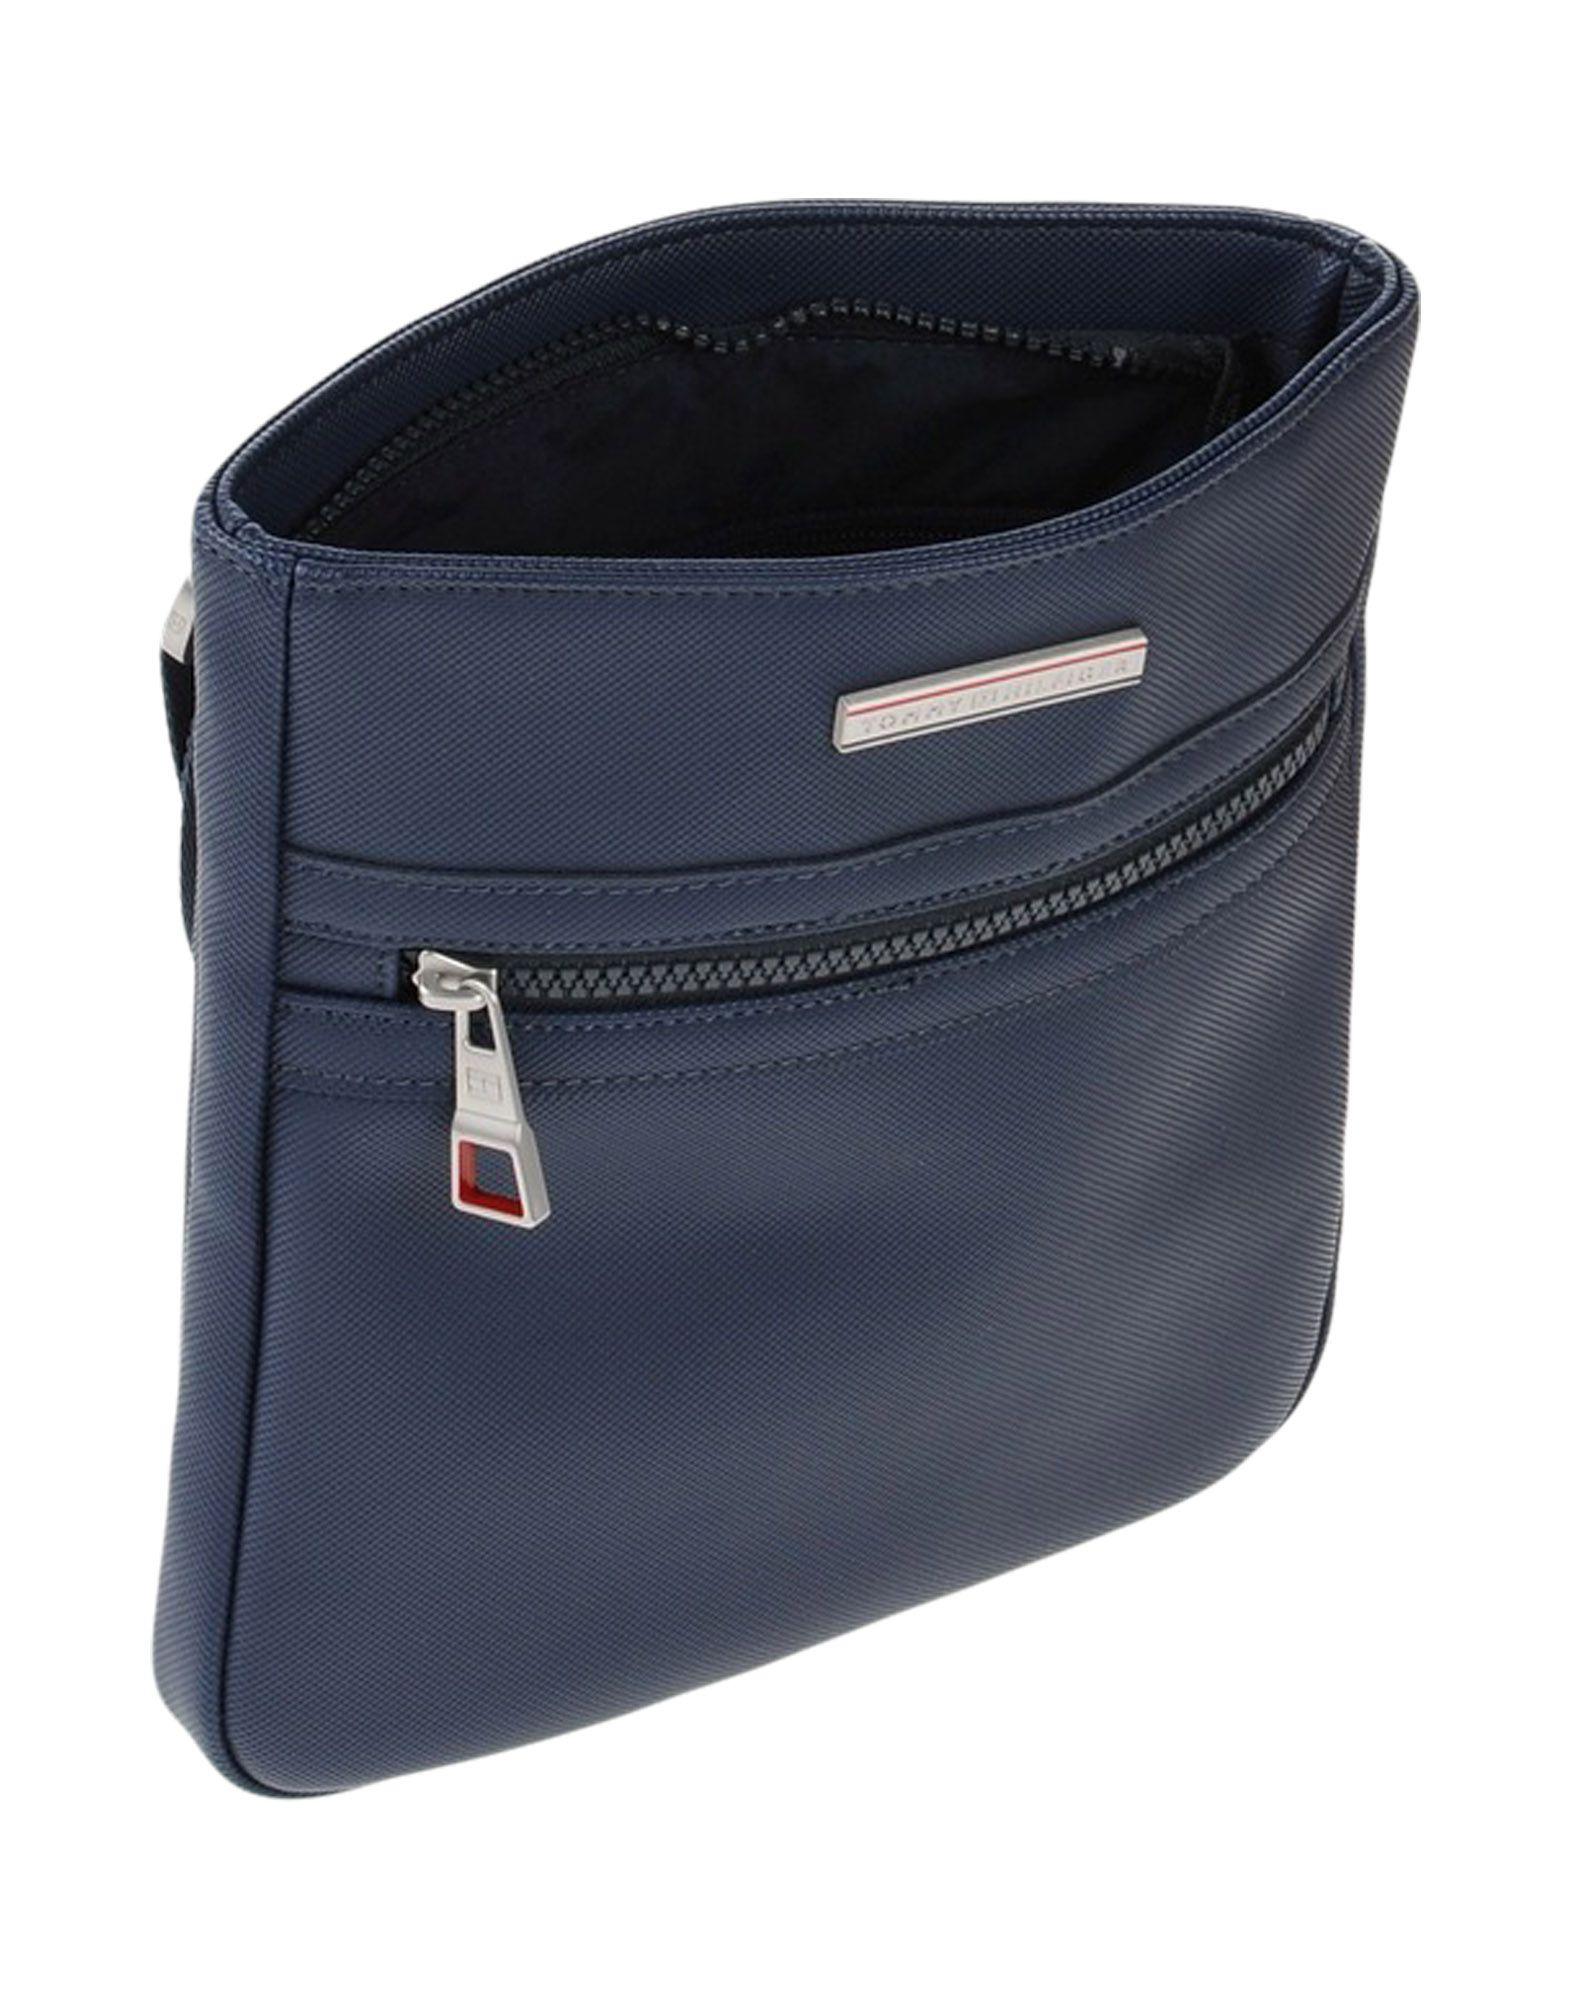 Tommy Hilfiger Cross-body Bag in Blue for Men - Lyst